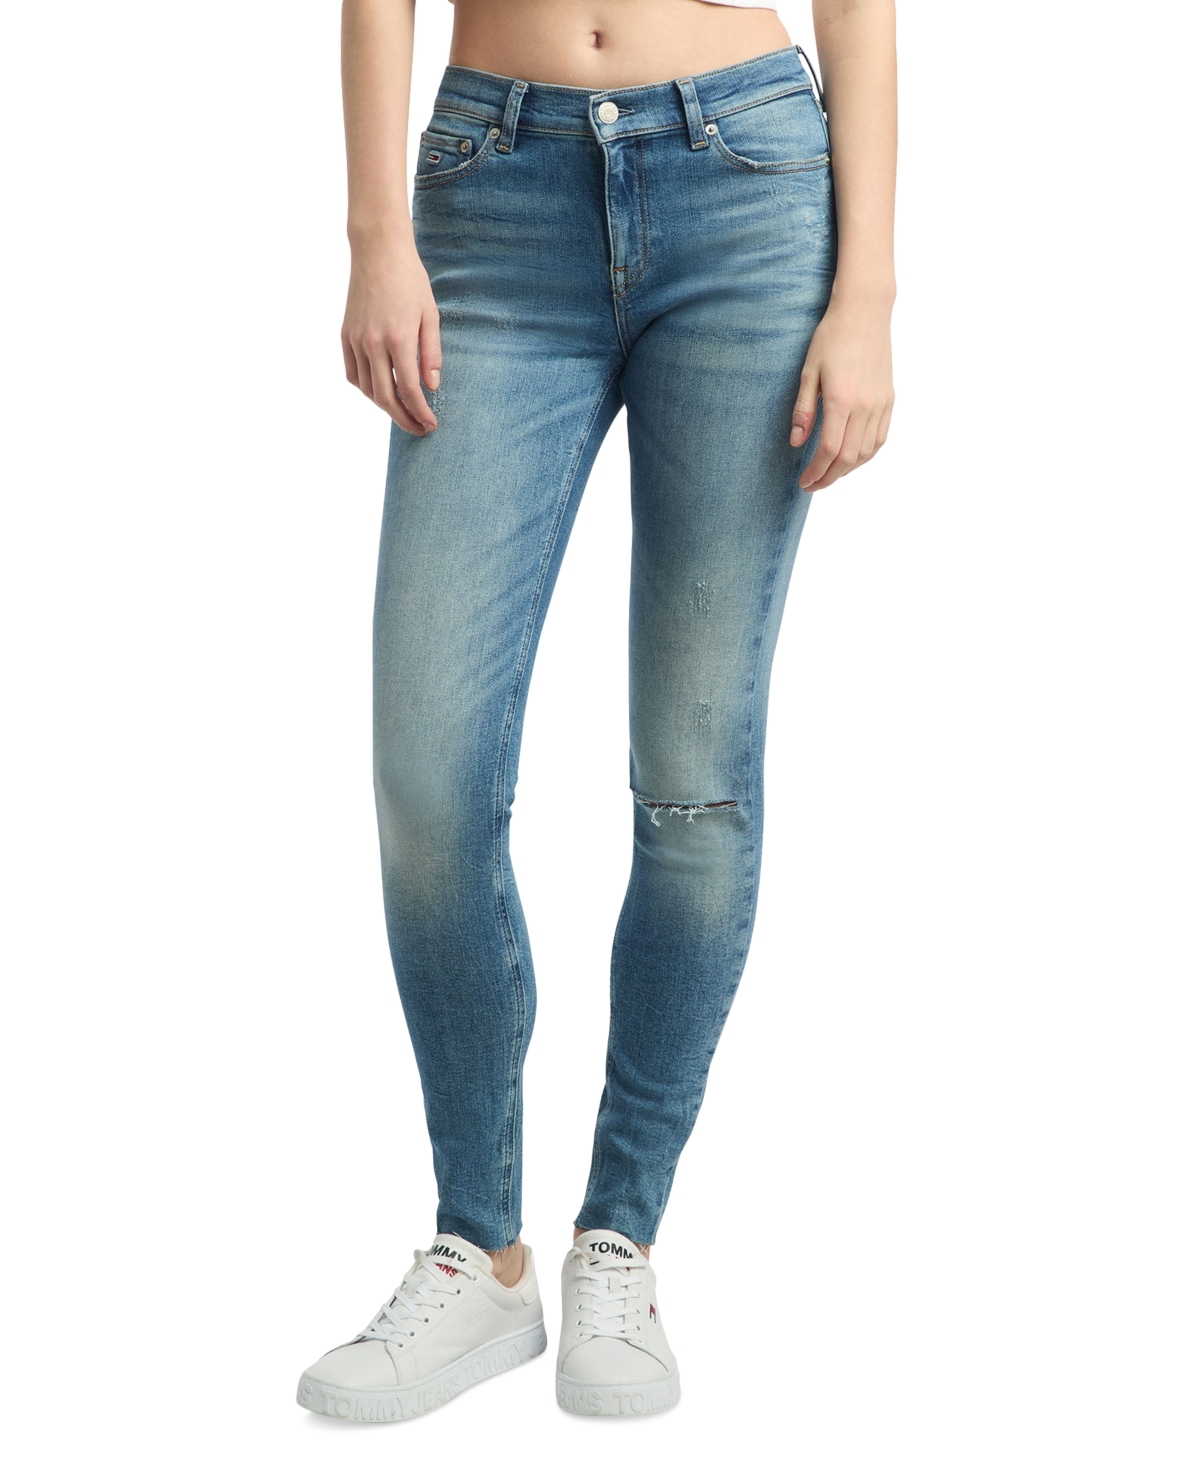 Women's Nora Mid-Rise Distressed Skinny Jeans - DENIM MEDIUM